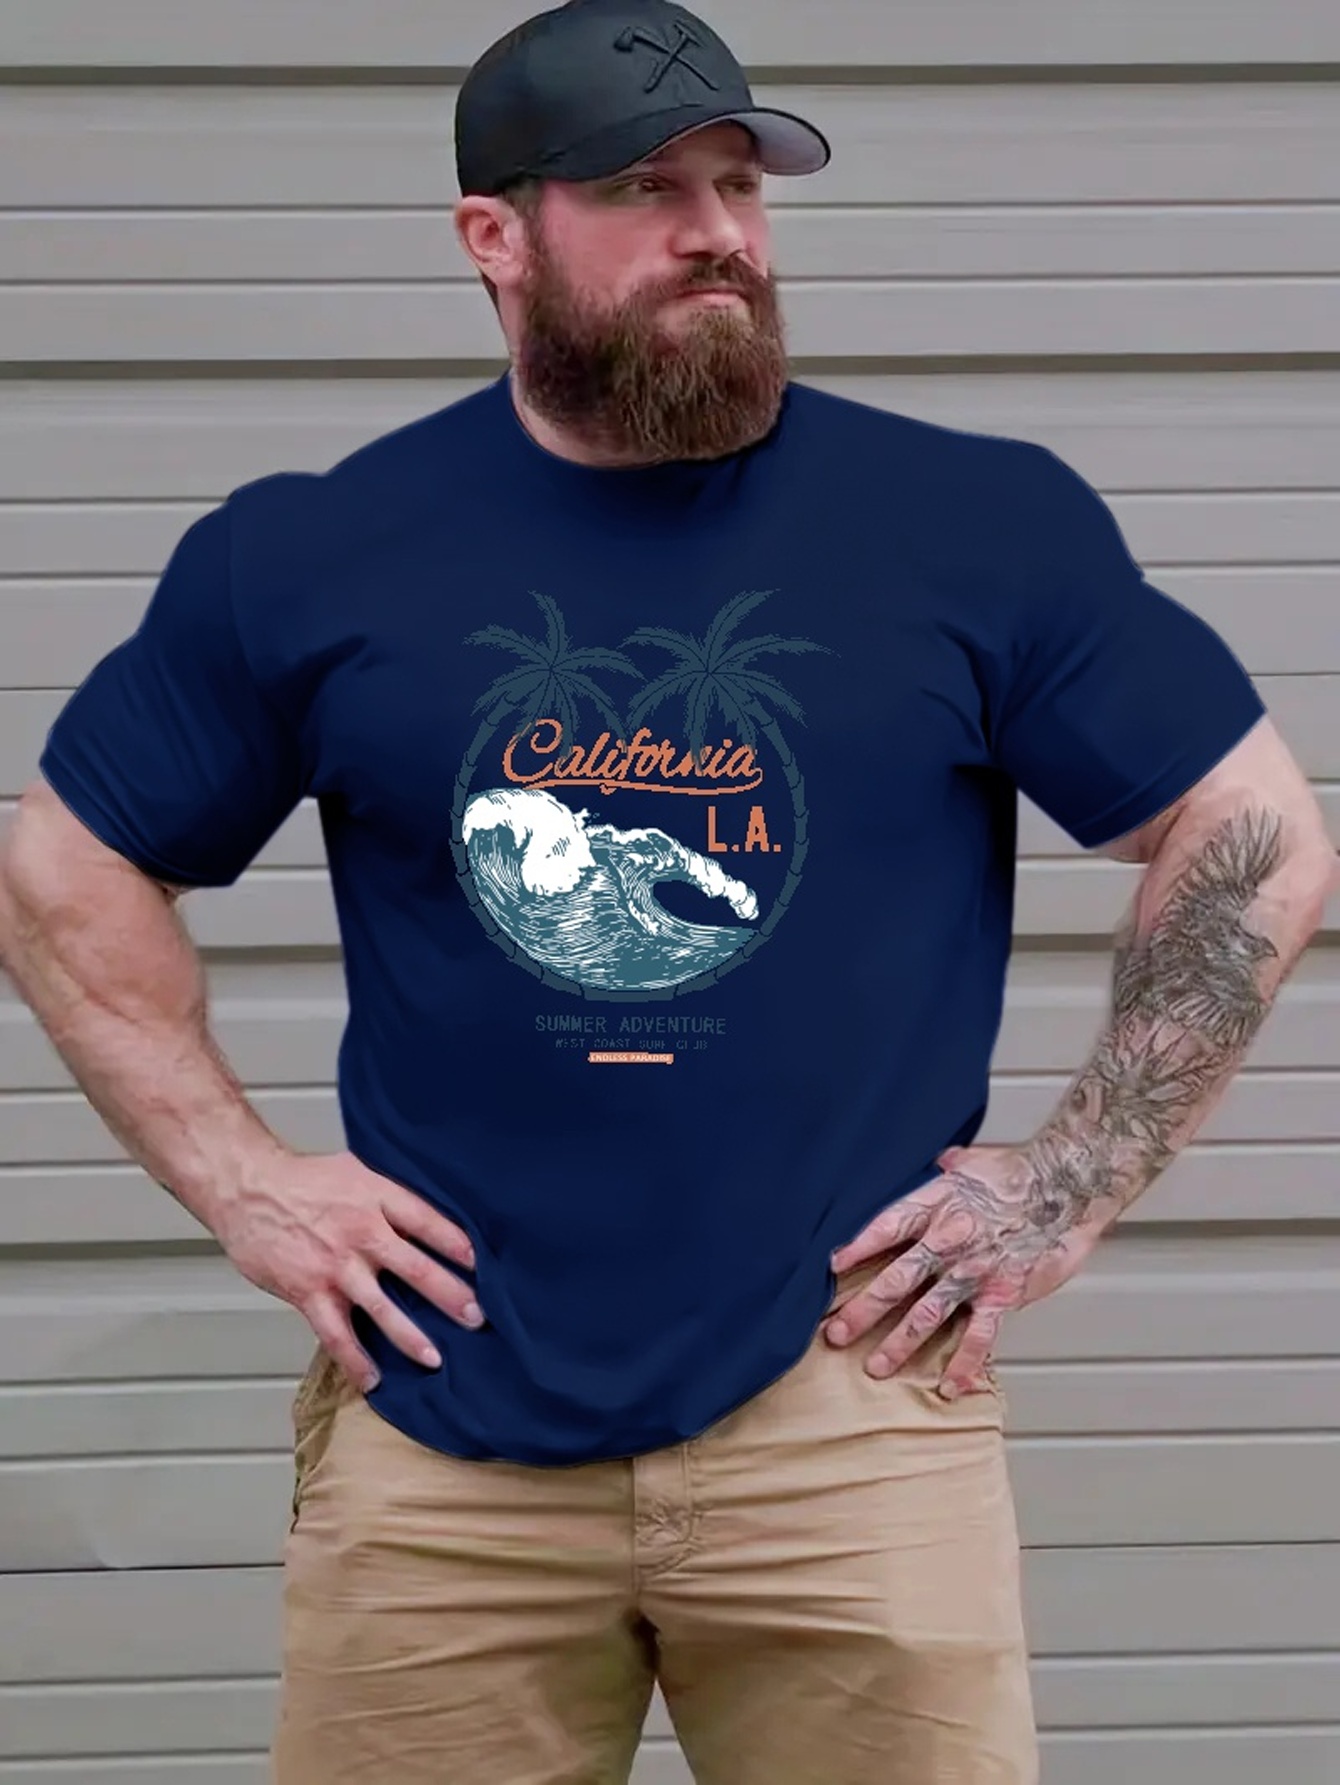 West Coast California Baseball T-Shirt - Shirtstore